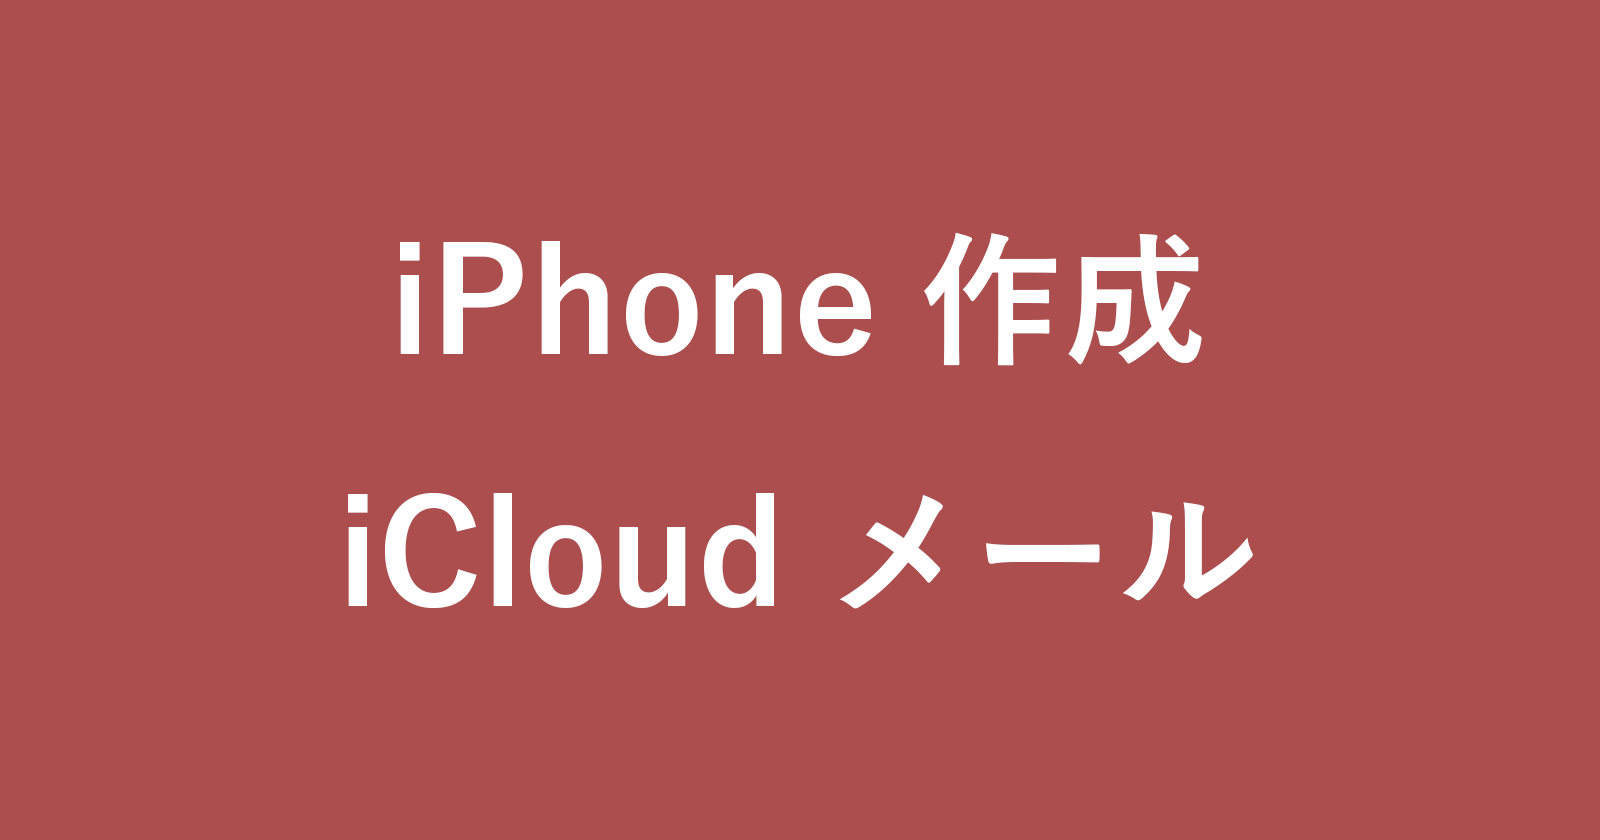 iphone icloud mail